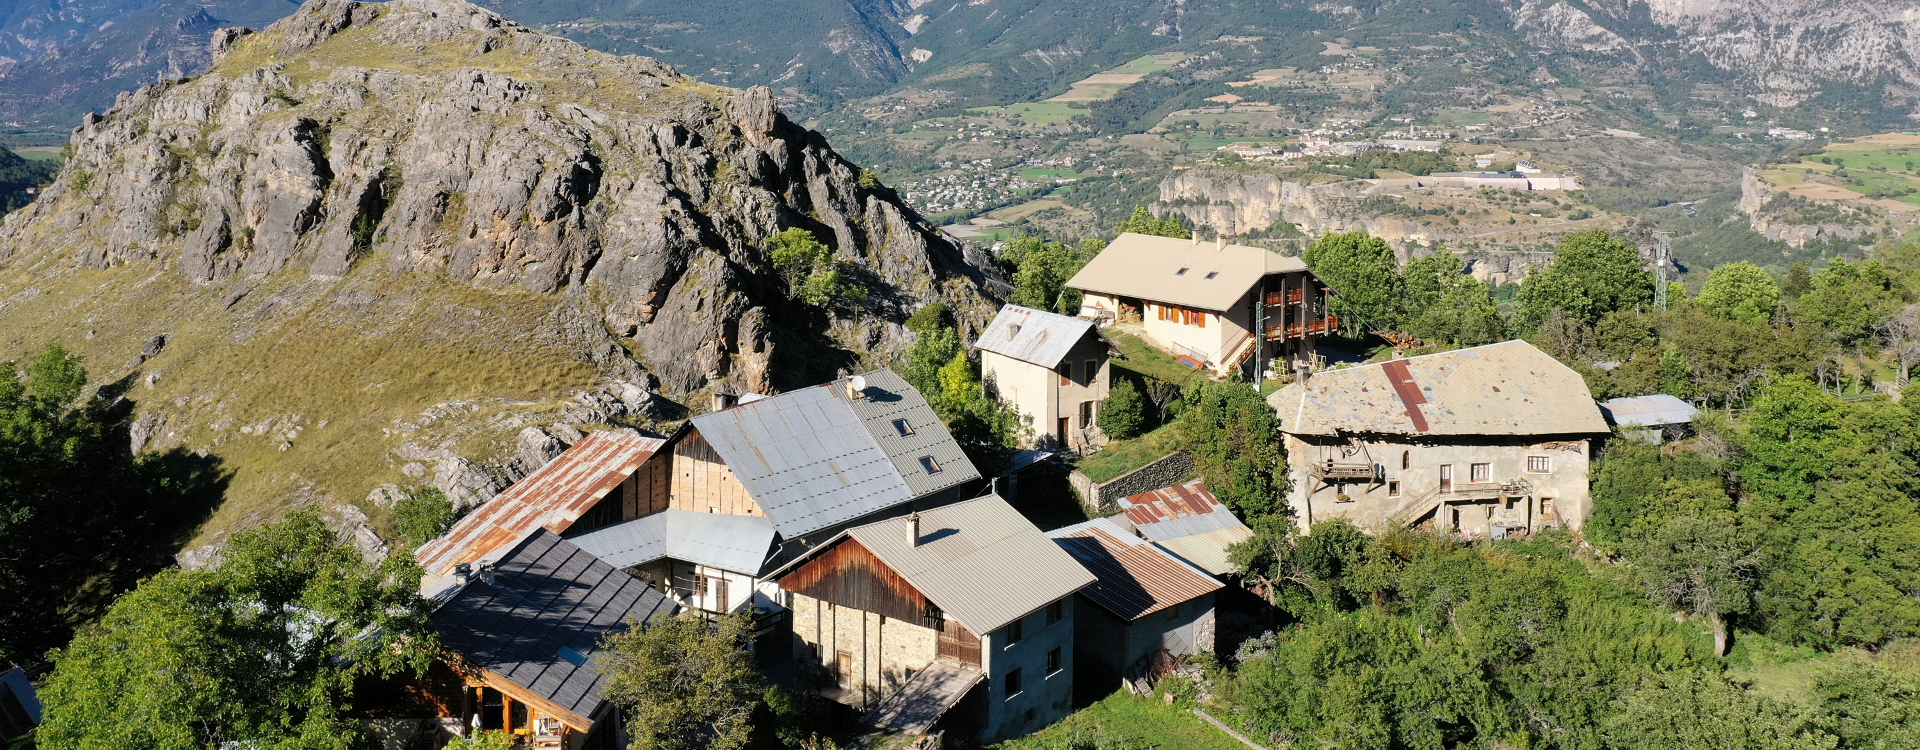 Risoul 's Hamlets France , French southern alps